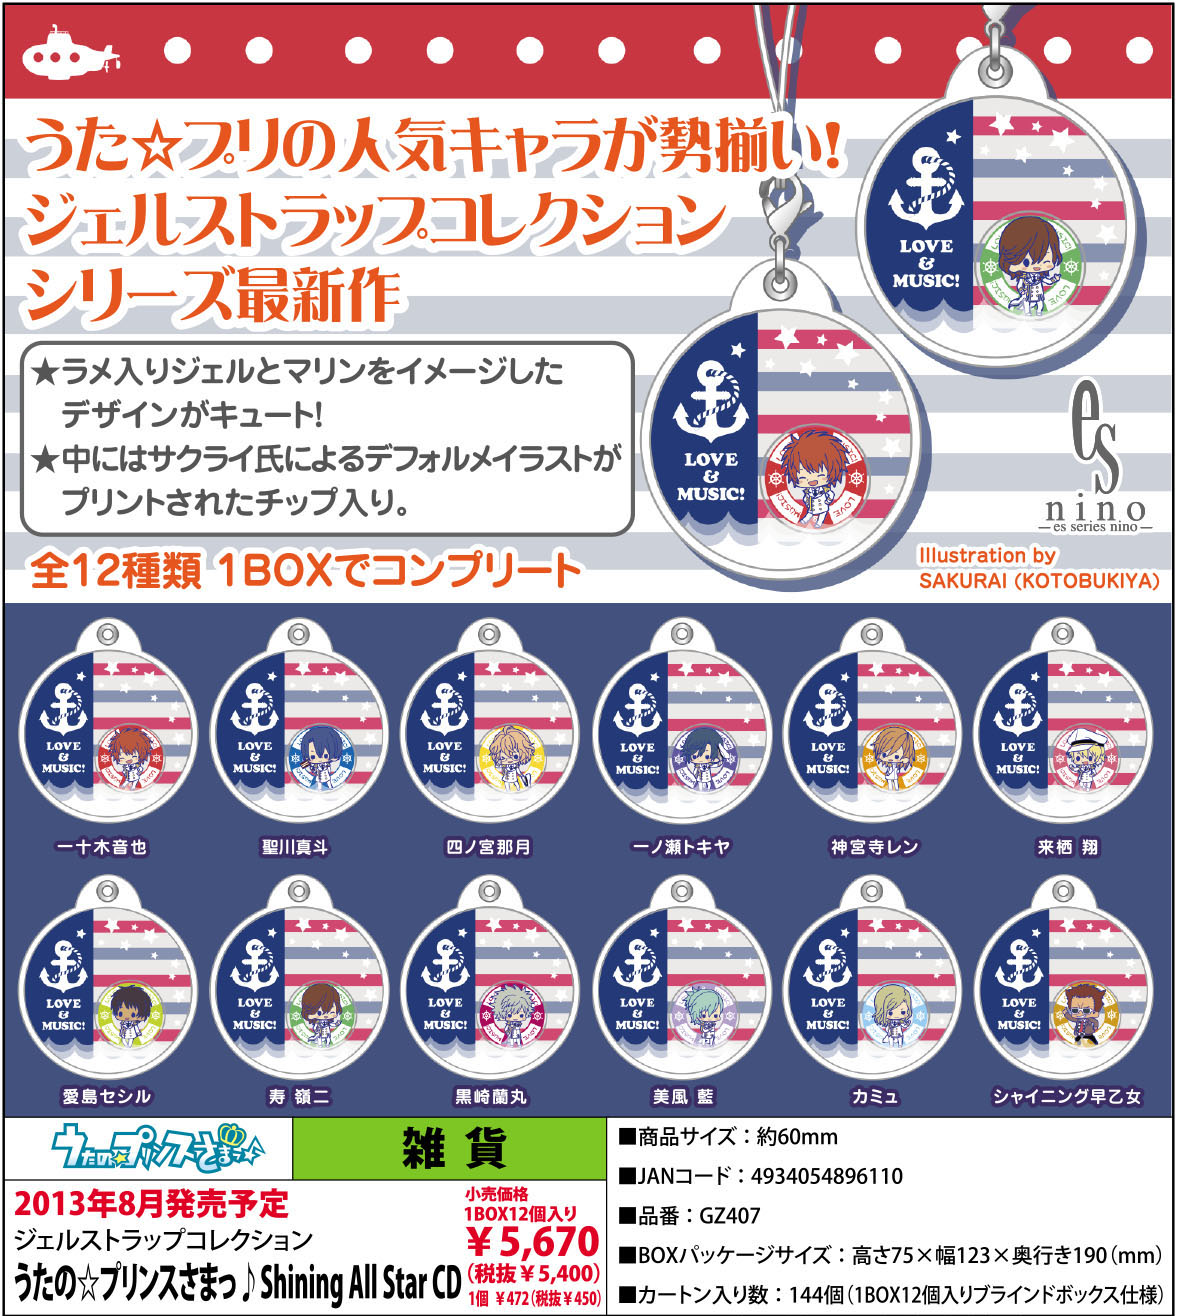 Gel Strap Collection Uta No Prince Sama Shining All Star Cd Milestone Inc Product Detail Information